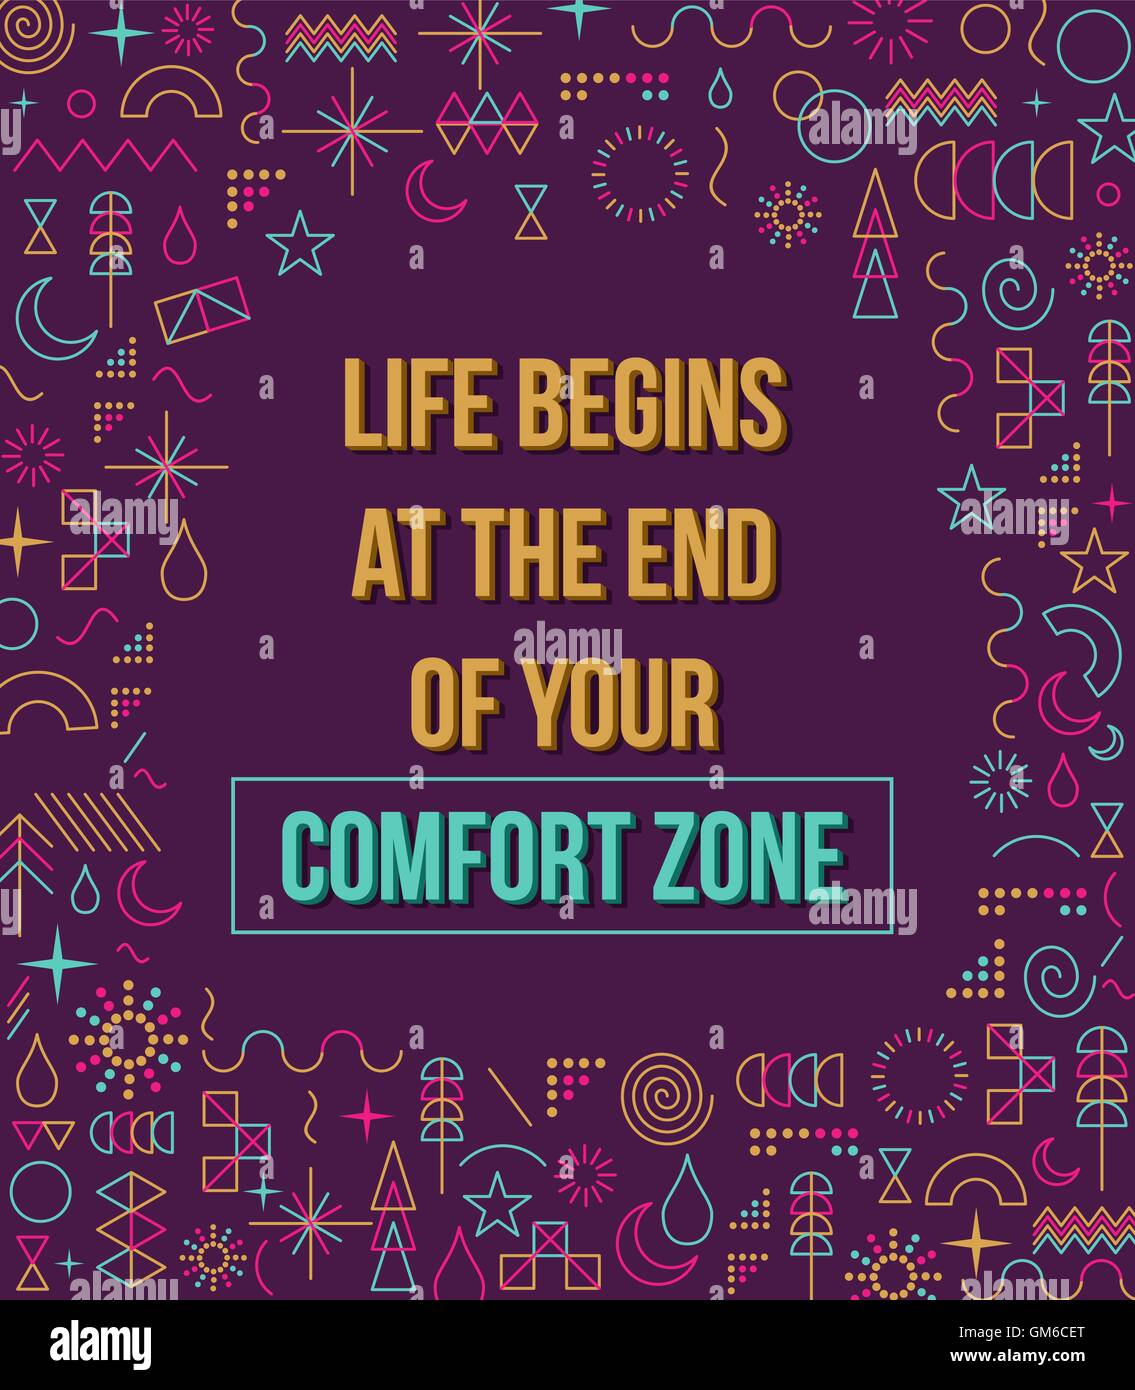 Comfort zone inspiration quote illustration Stock Vector